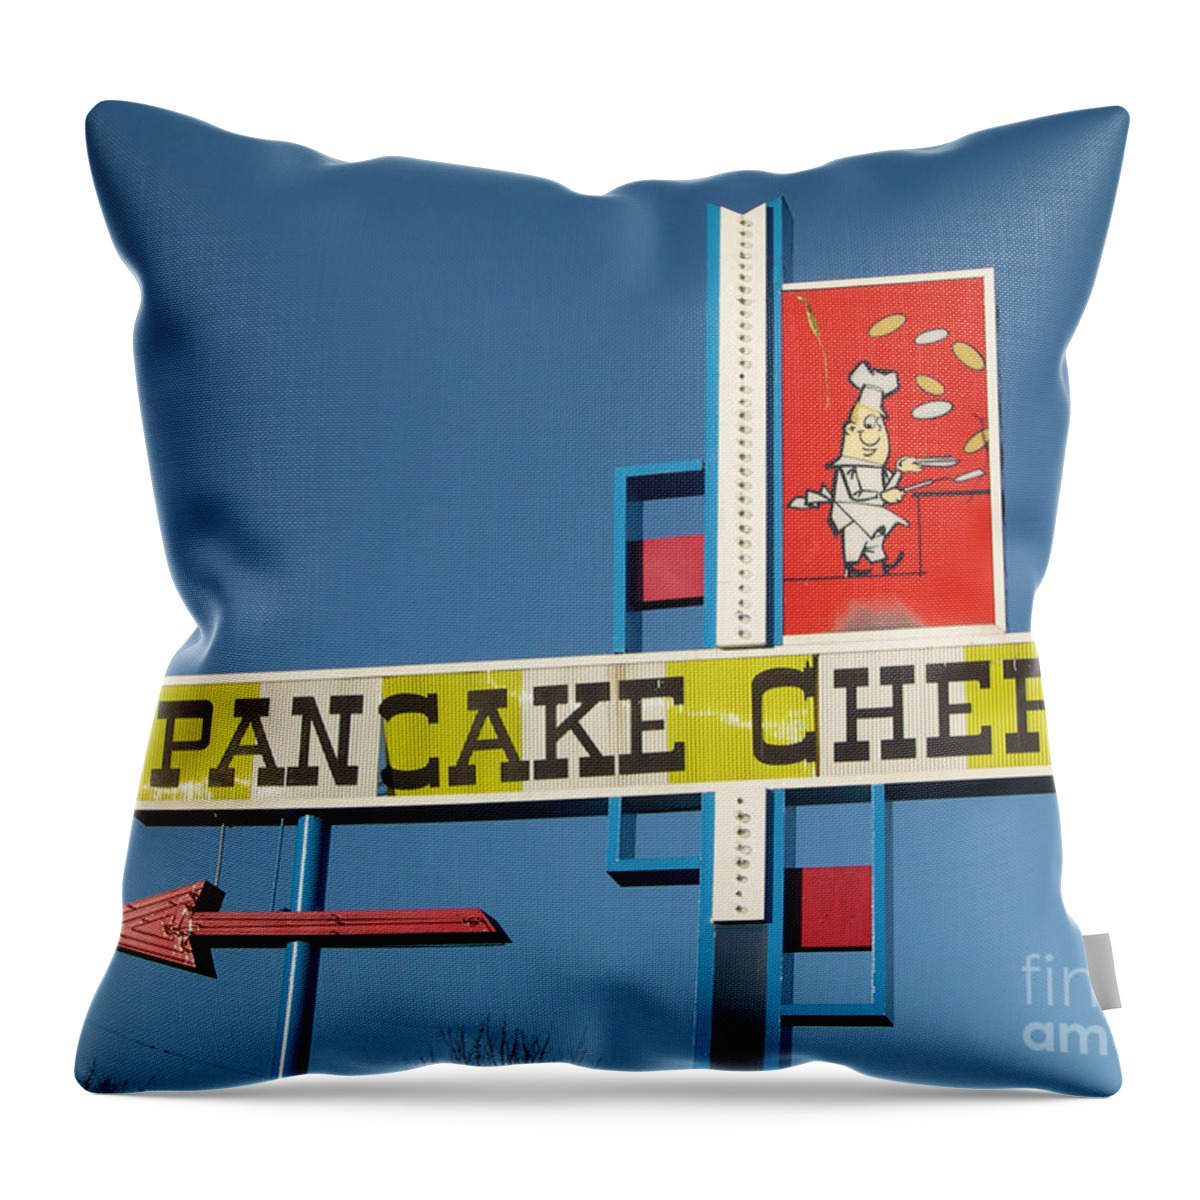 Pancakes Throw Pillow featuring the digital art Pancake Chef by Jim Zahniser